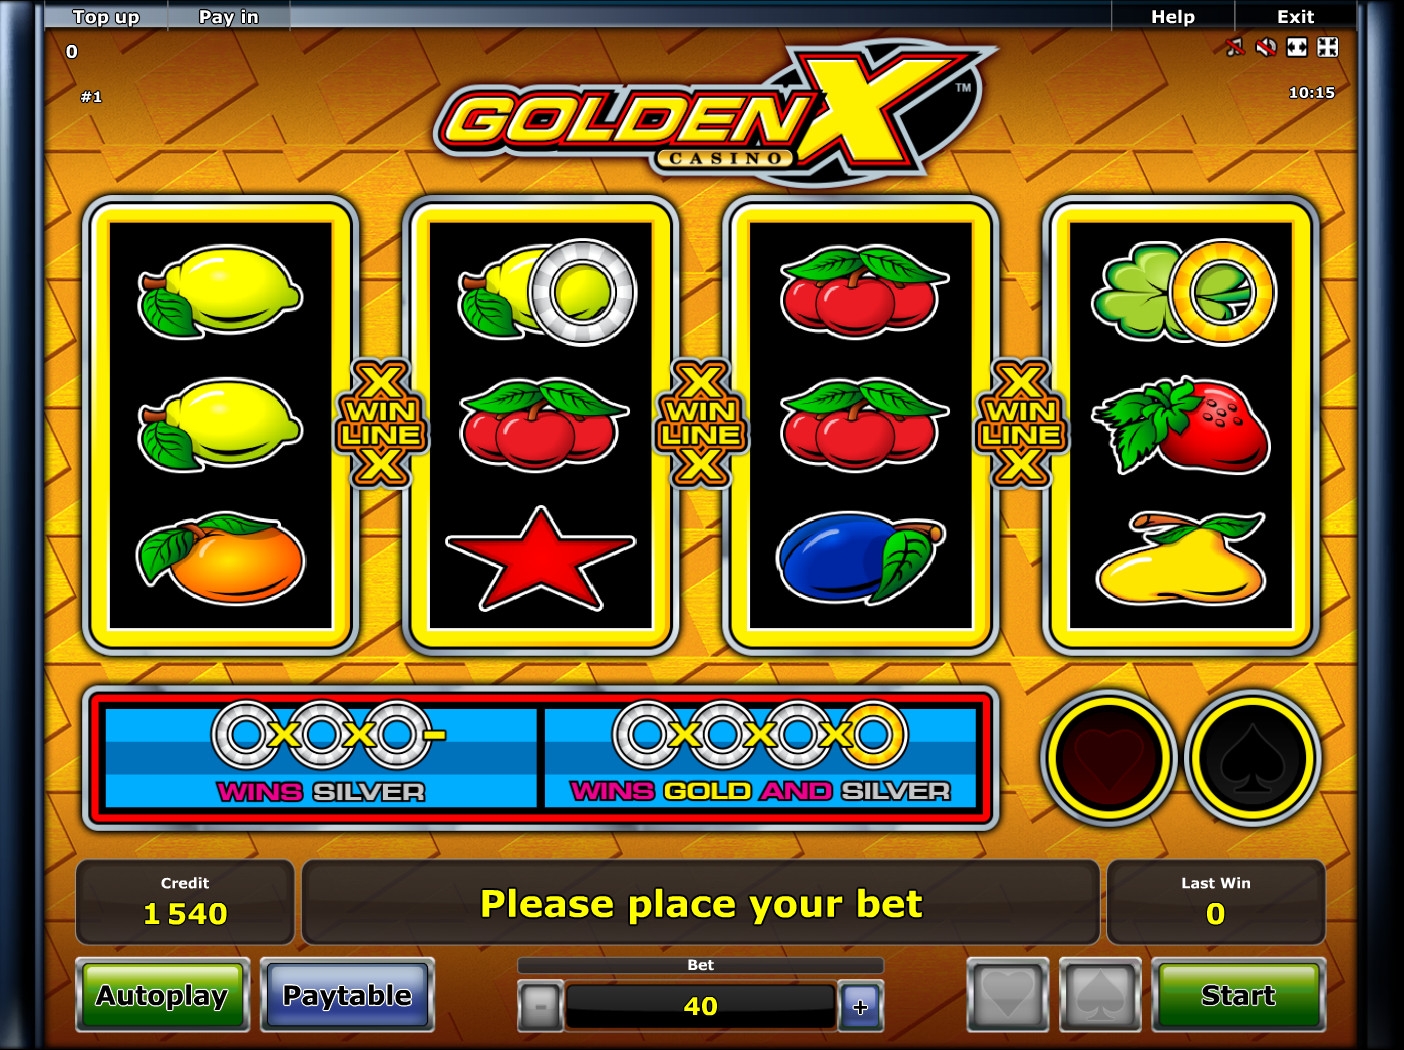 Golden X Casino (Golden X Casino) from category Slots